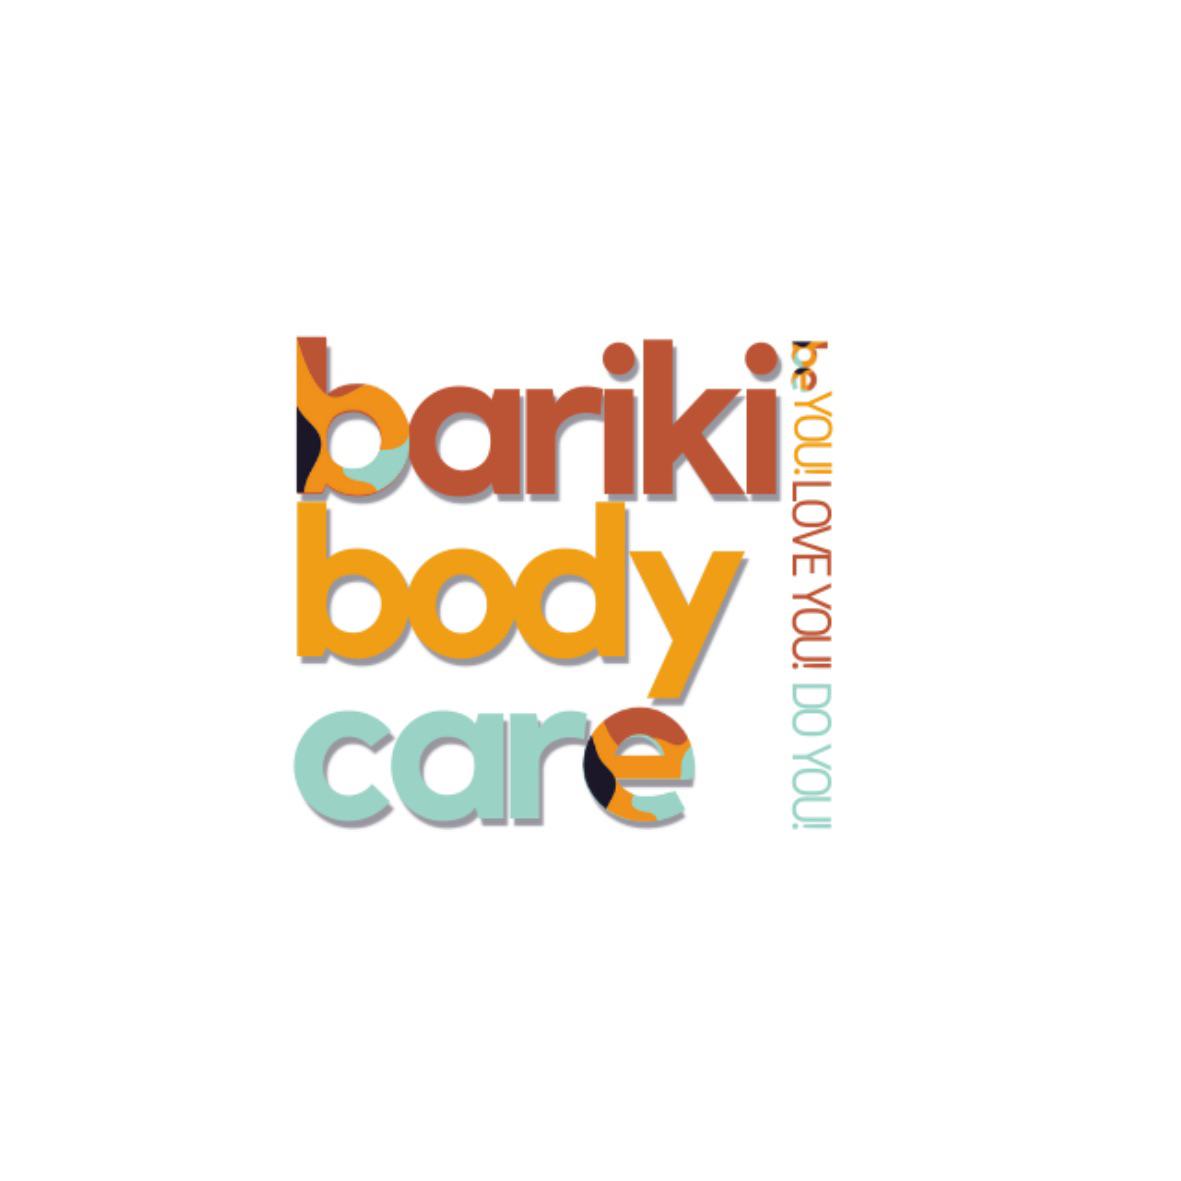 barikibodycare's images